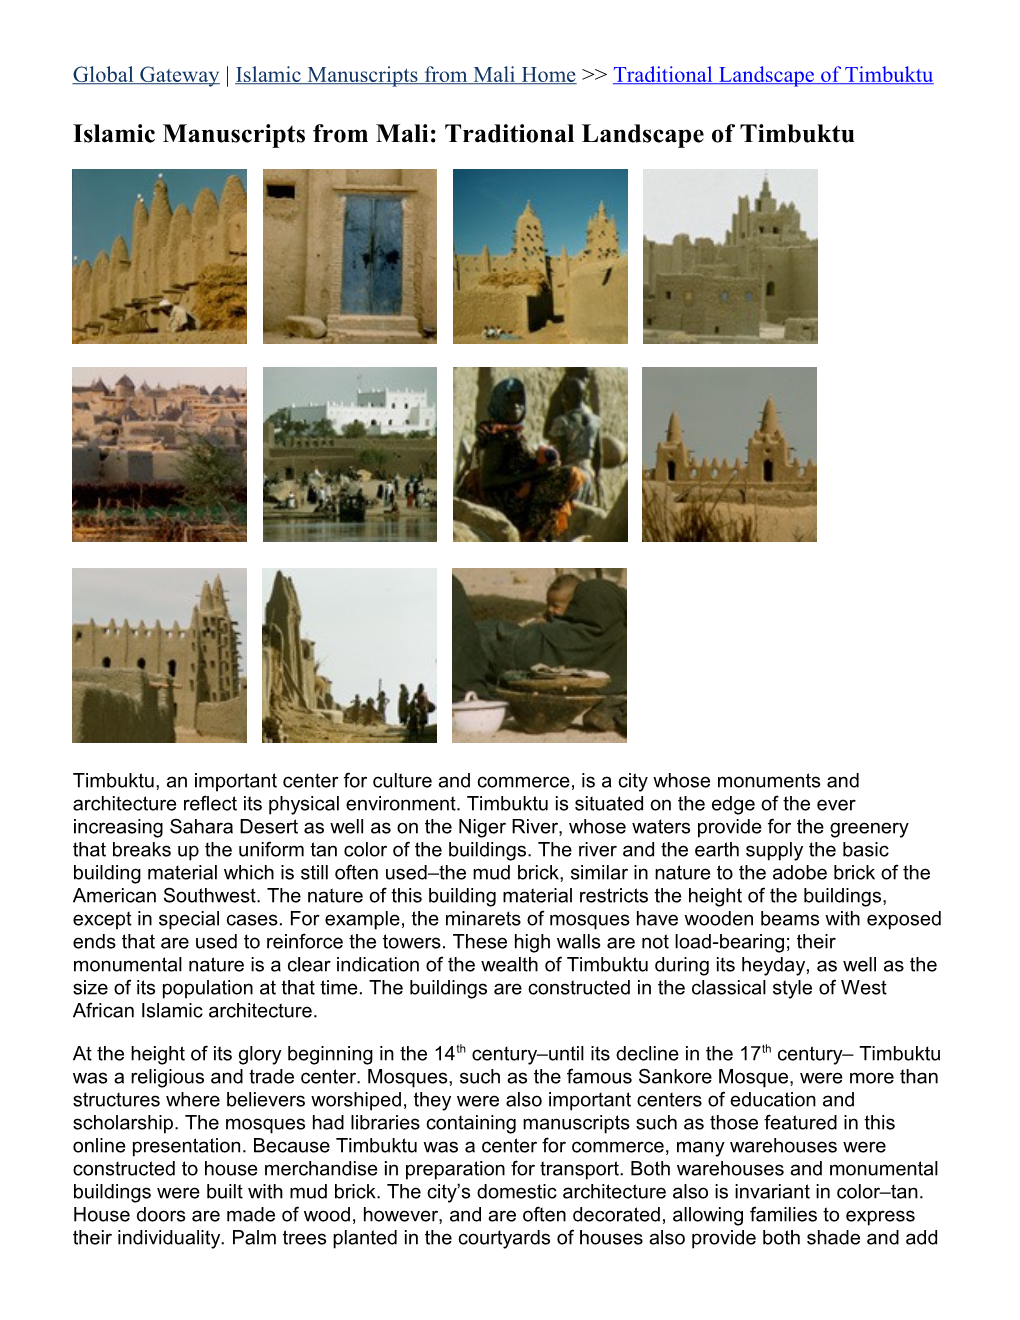 Global Gateway Islamic Manuscripts from Mali Home Traditional Landscape of Timbuktu